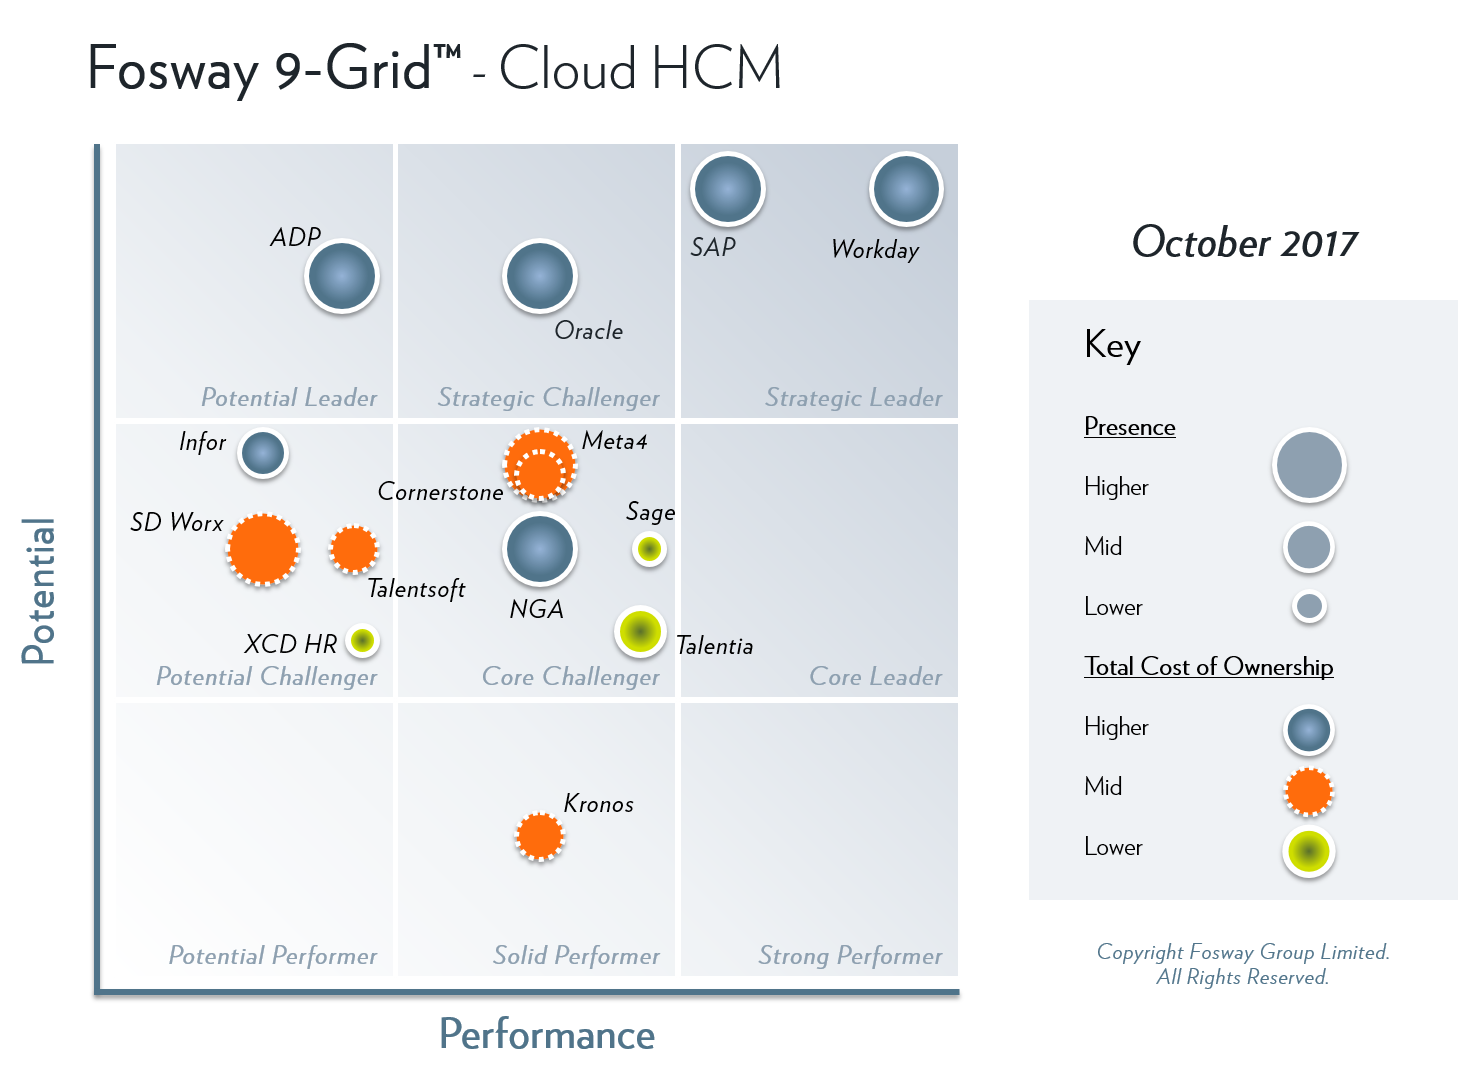 Fosway 9-Grid - Cloud HCM 2017